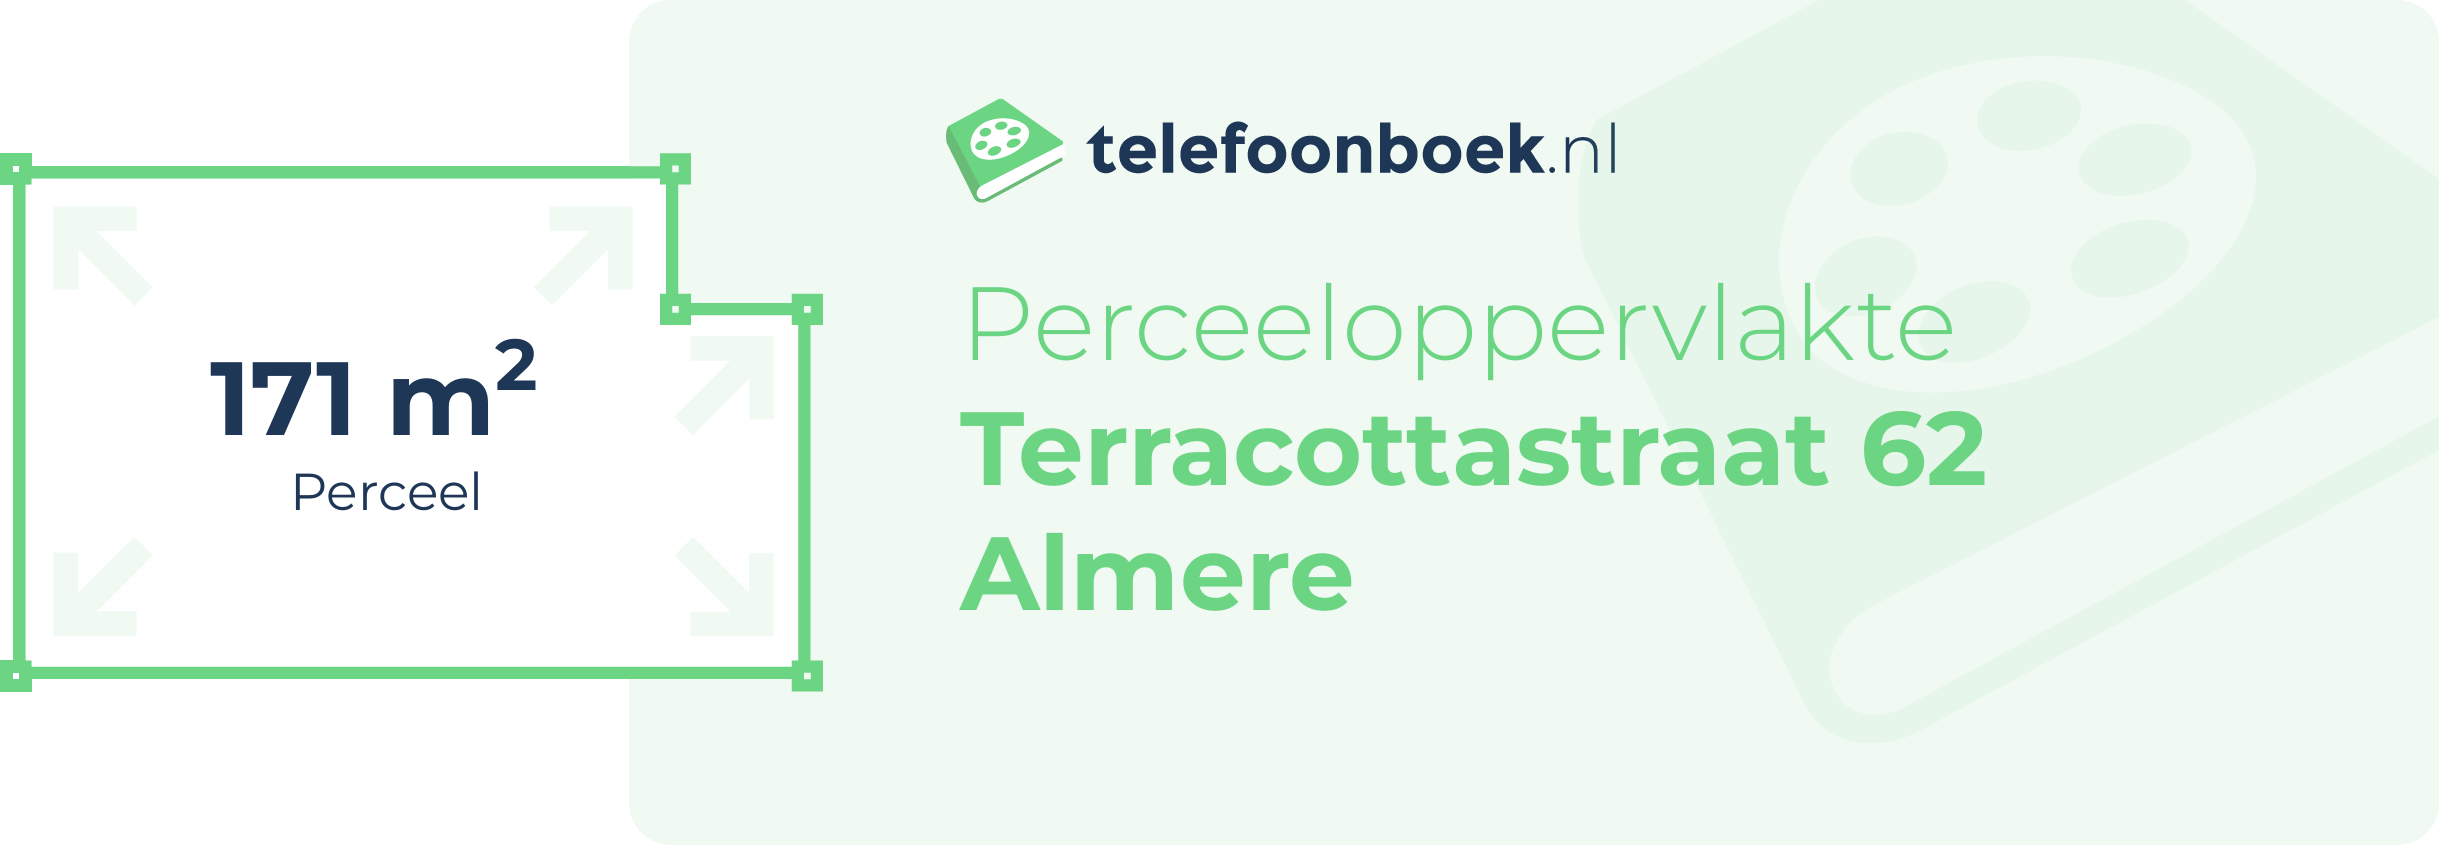 Perceeloppervlakte Terracottastraat 62 Almere